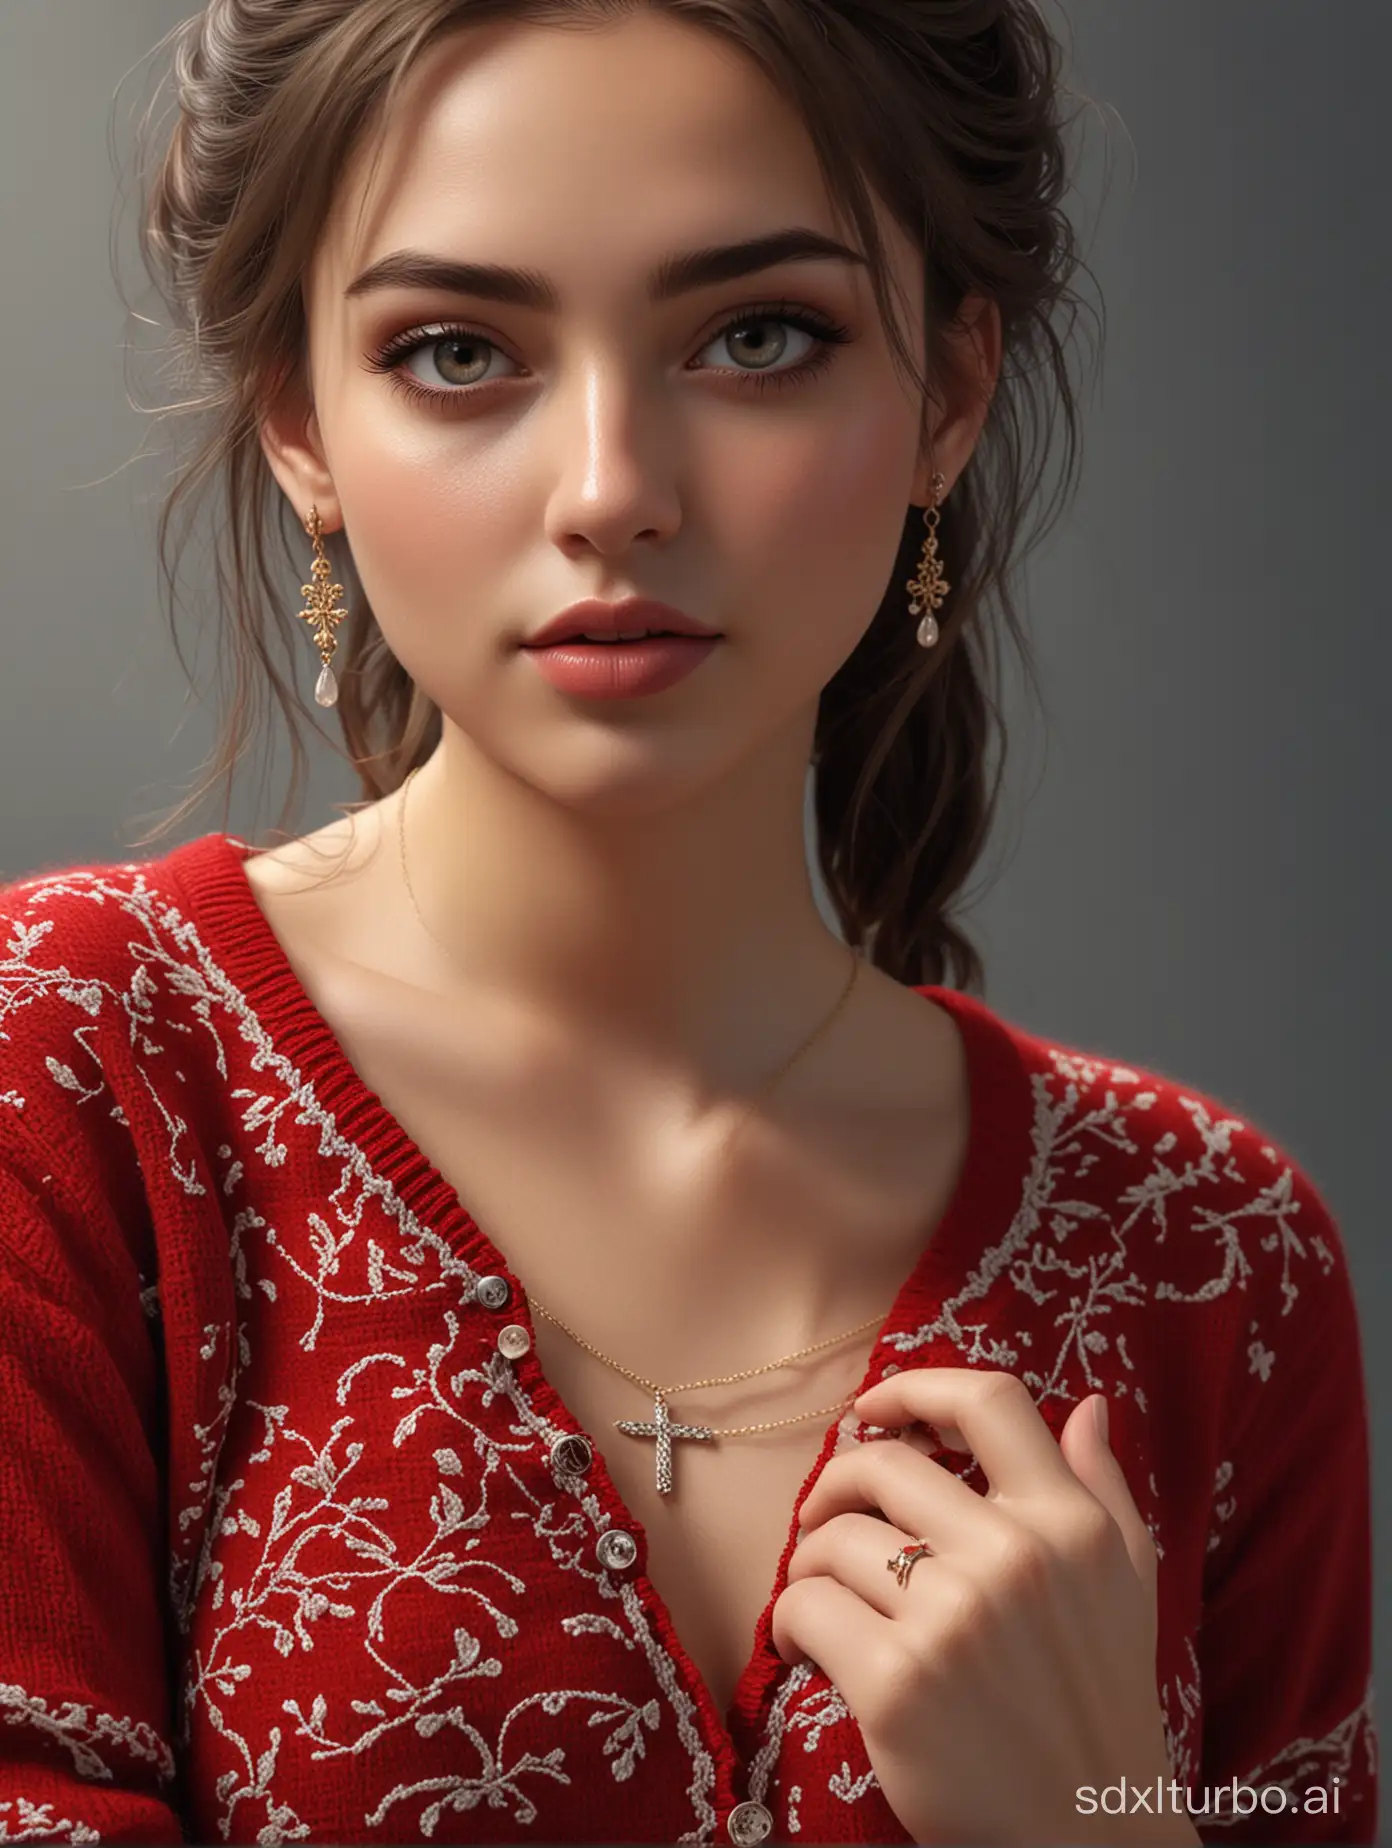 Mesmerizing-Portrait-of-a-Woman-in-Red-Wool-Sweater-and-Stone-Cross-Bracelet